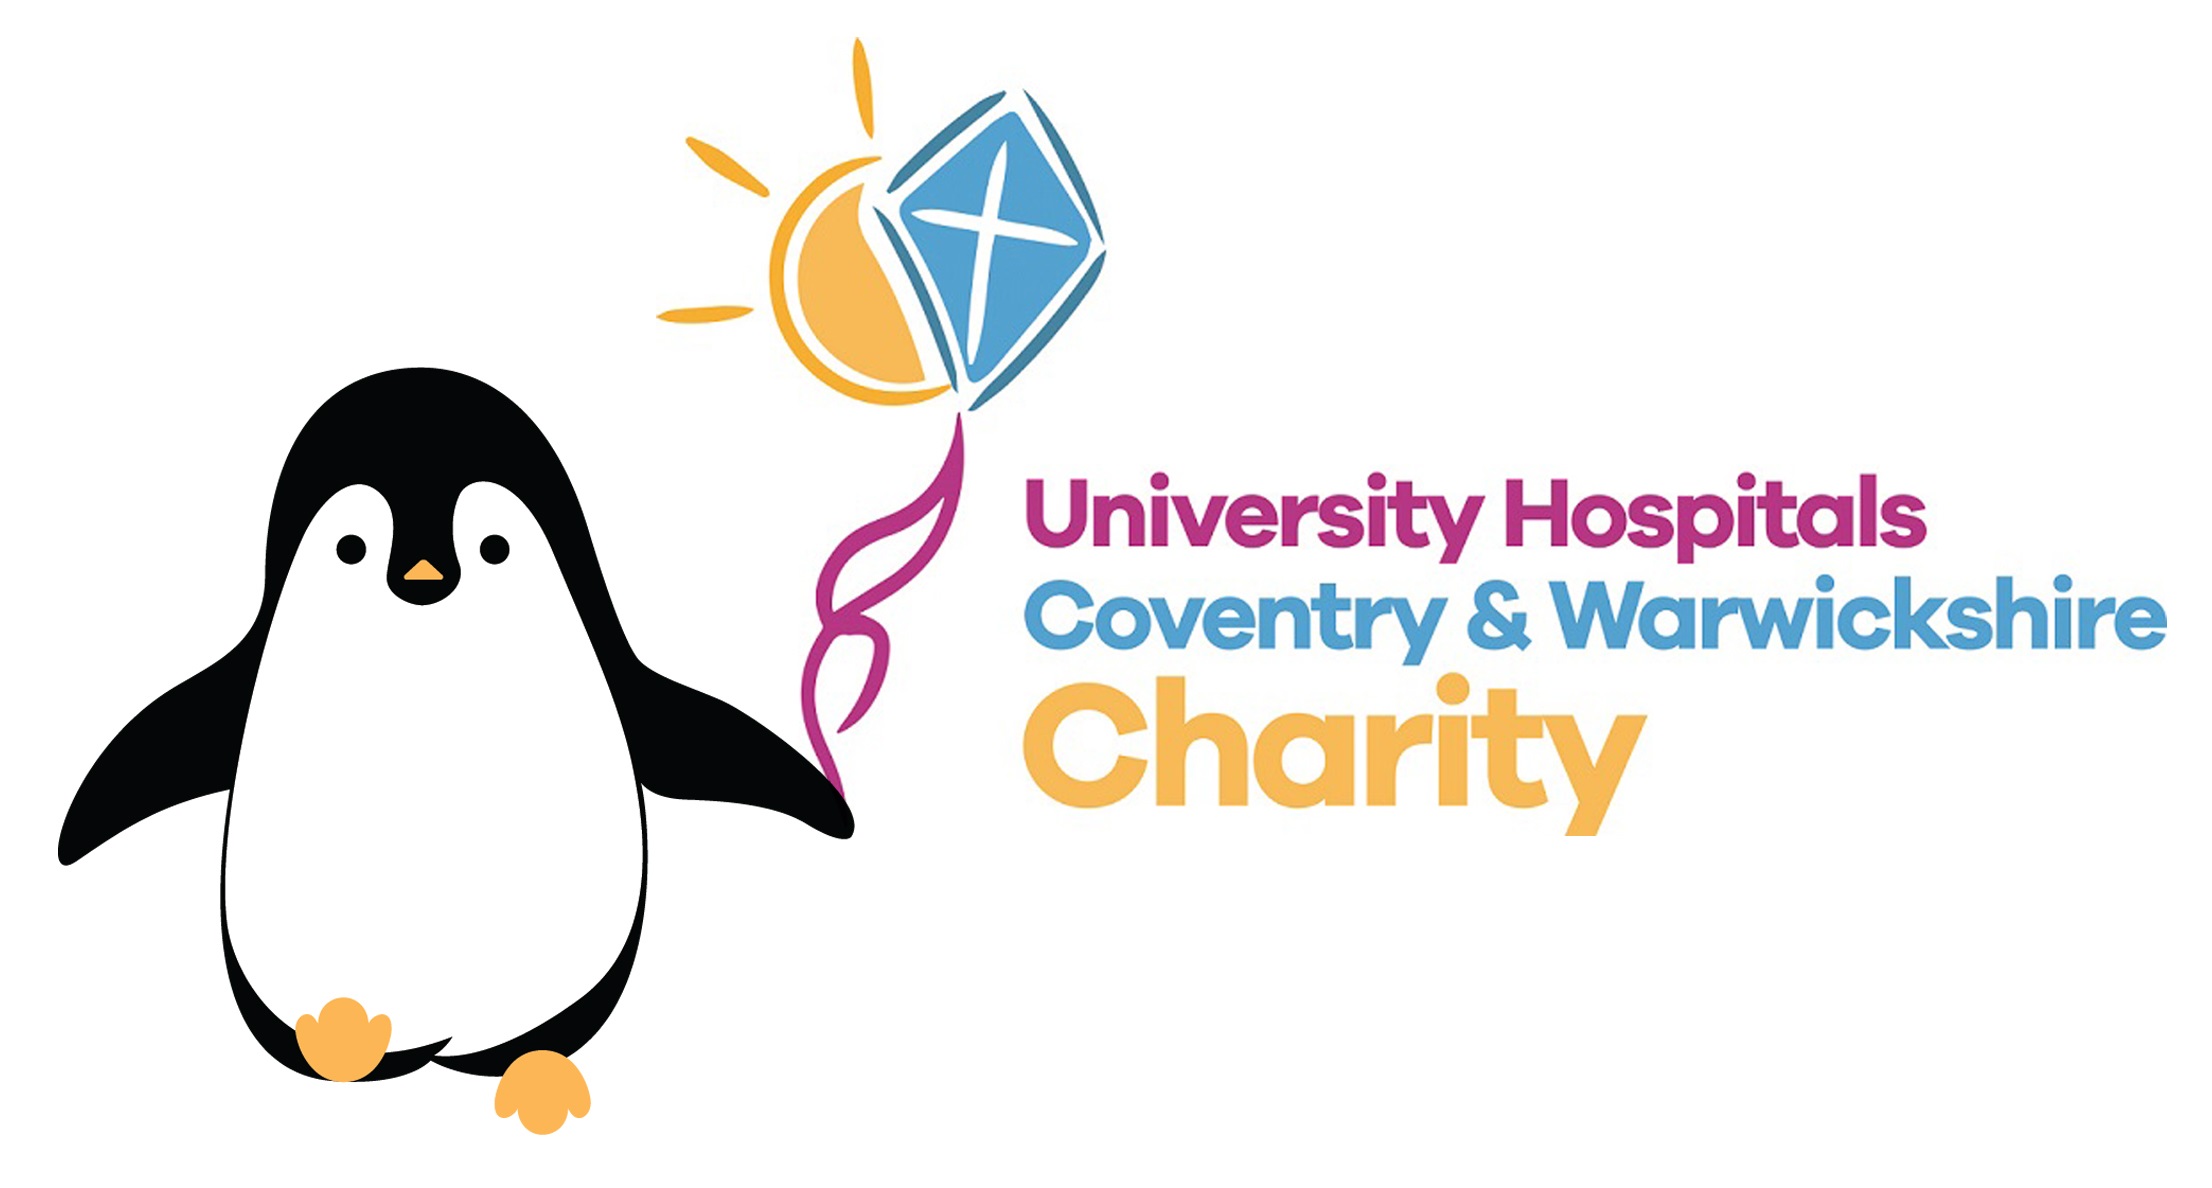 University Hospitals Coventry & Warwickshire Charity